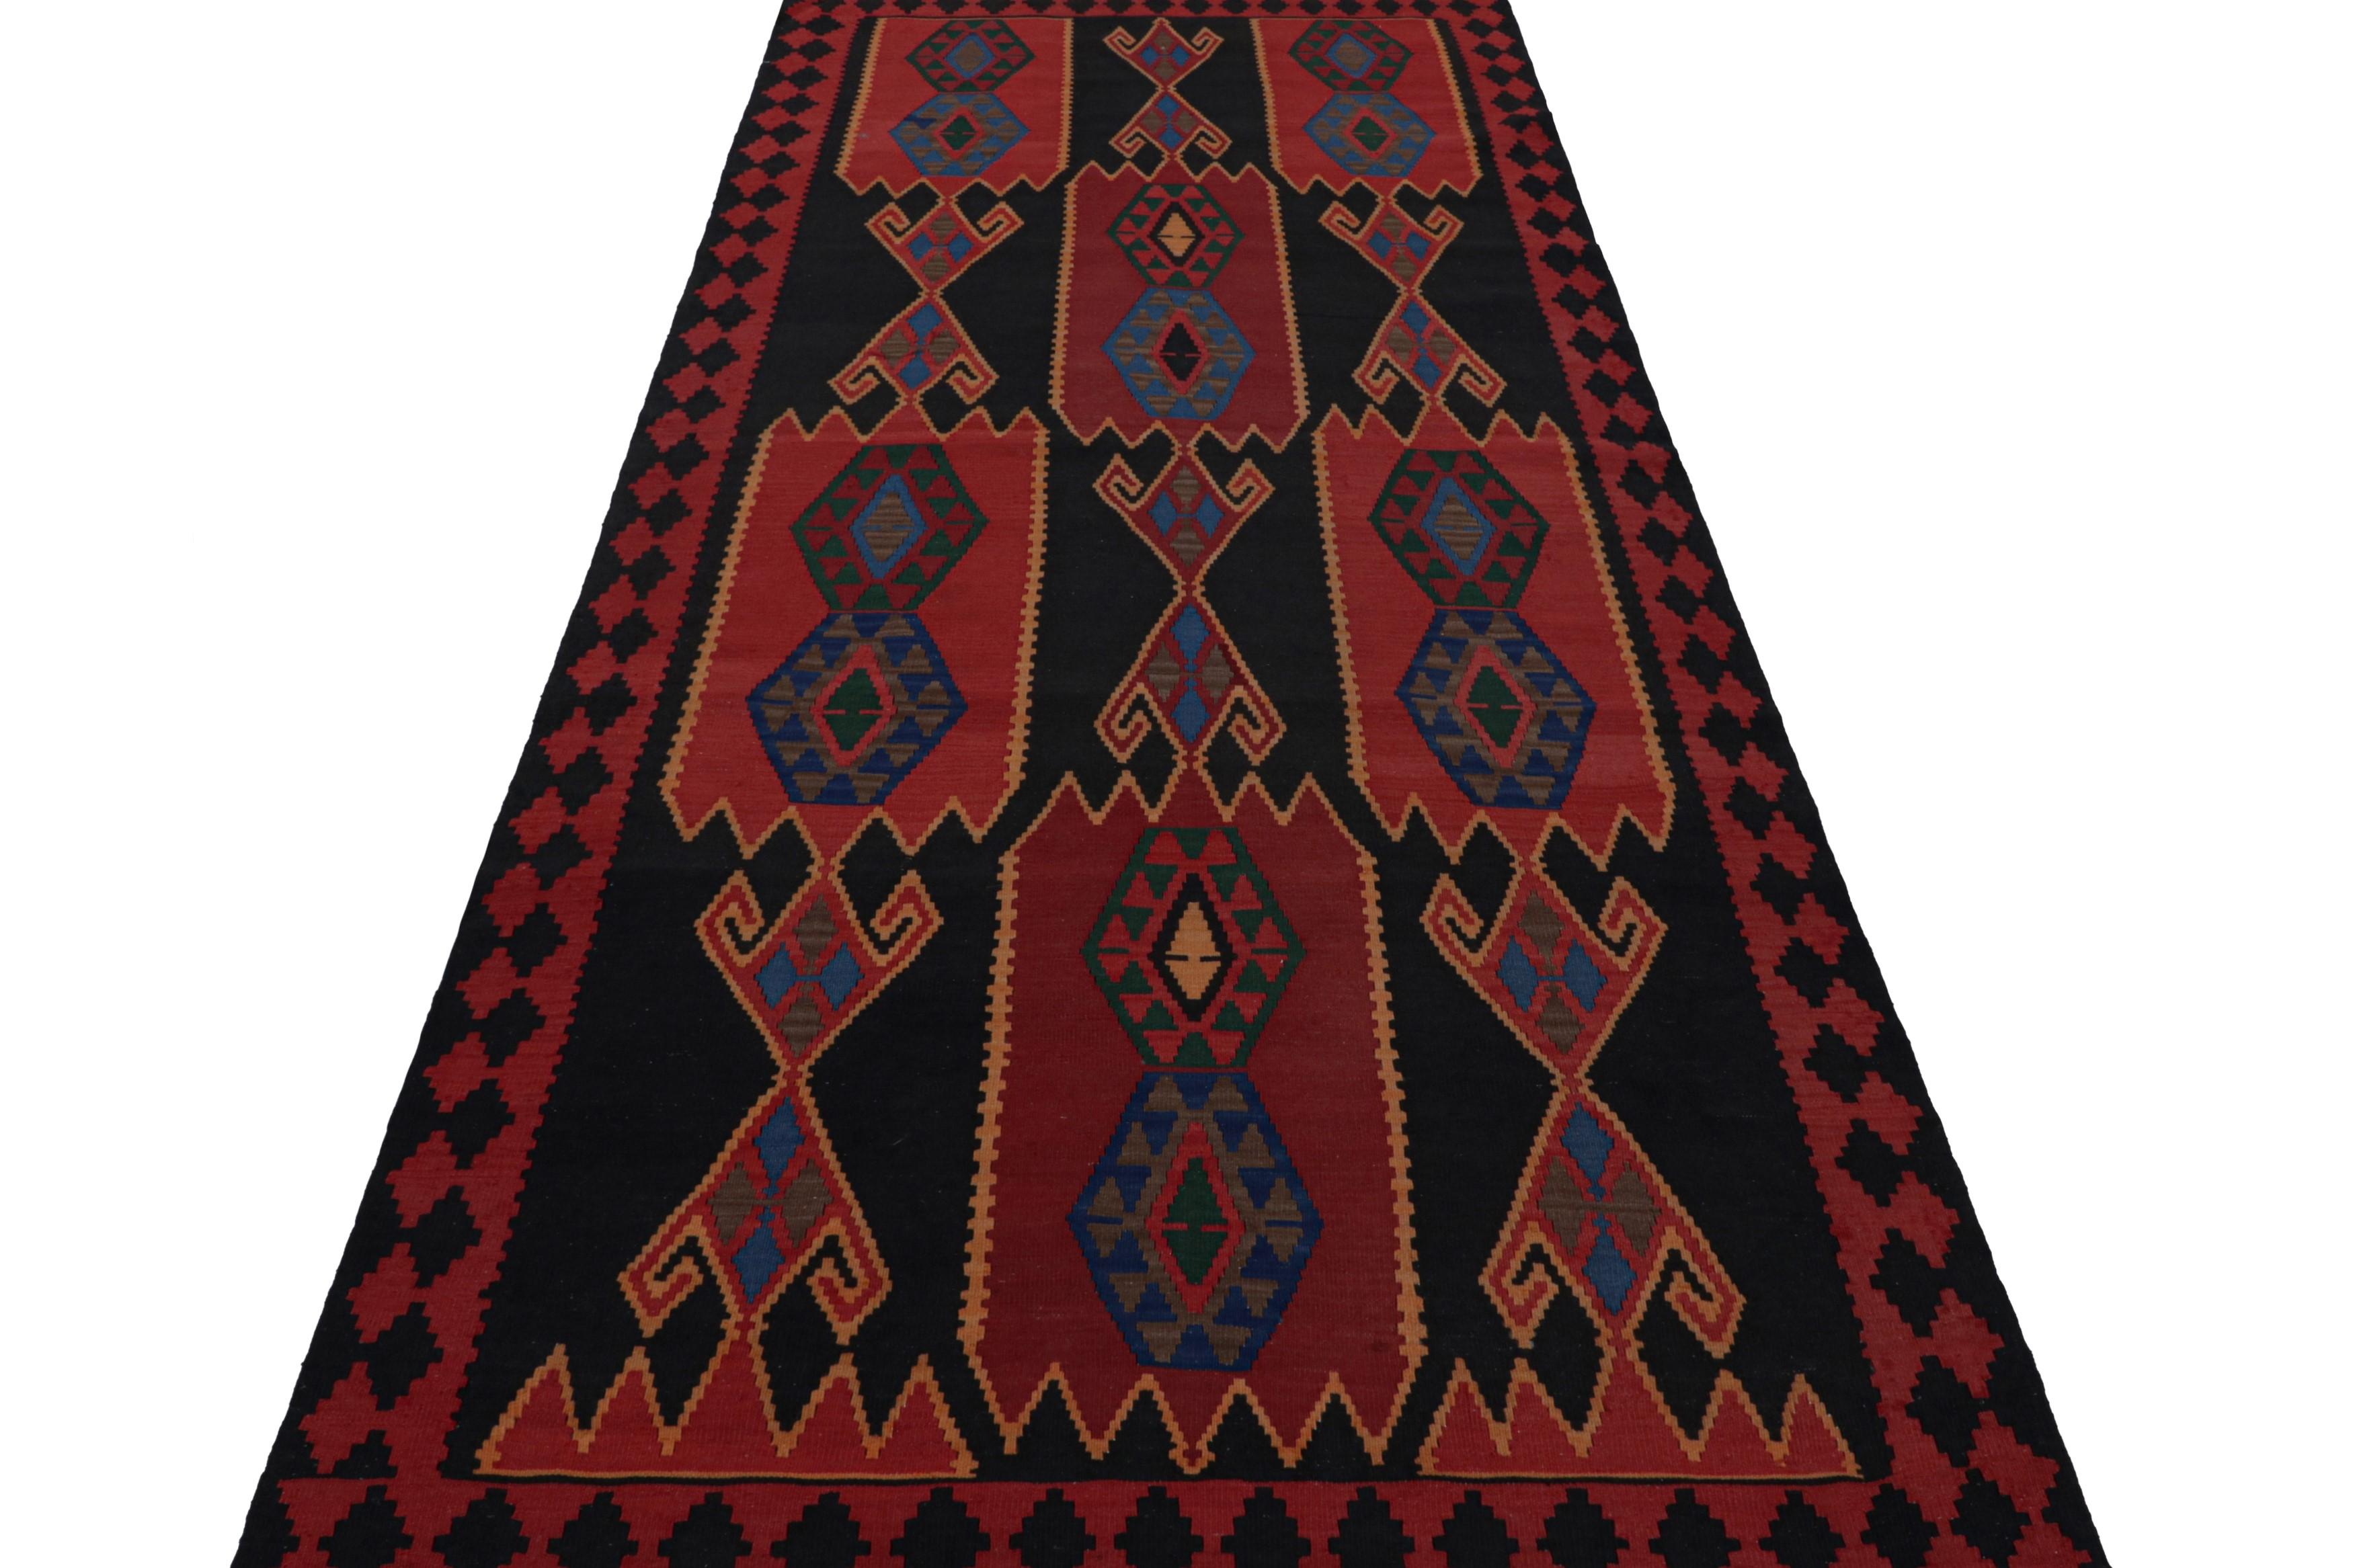 Tribal Vintage Afghan Kilim Runner Rug, with Geometric Patterns, from Rug & Kilim For Sale